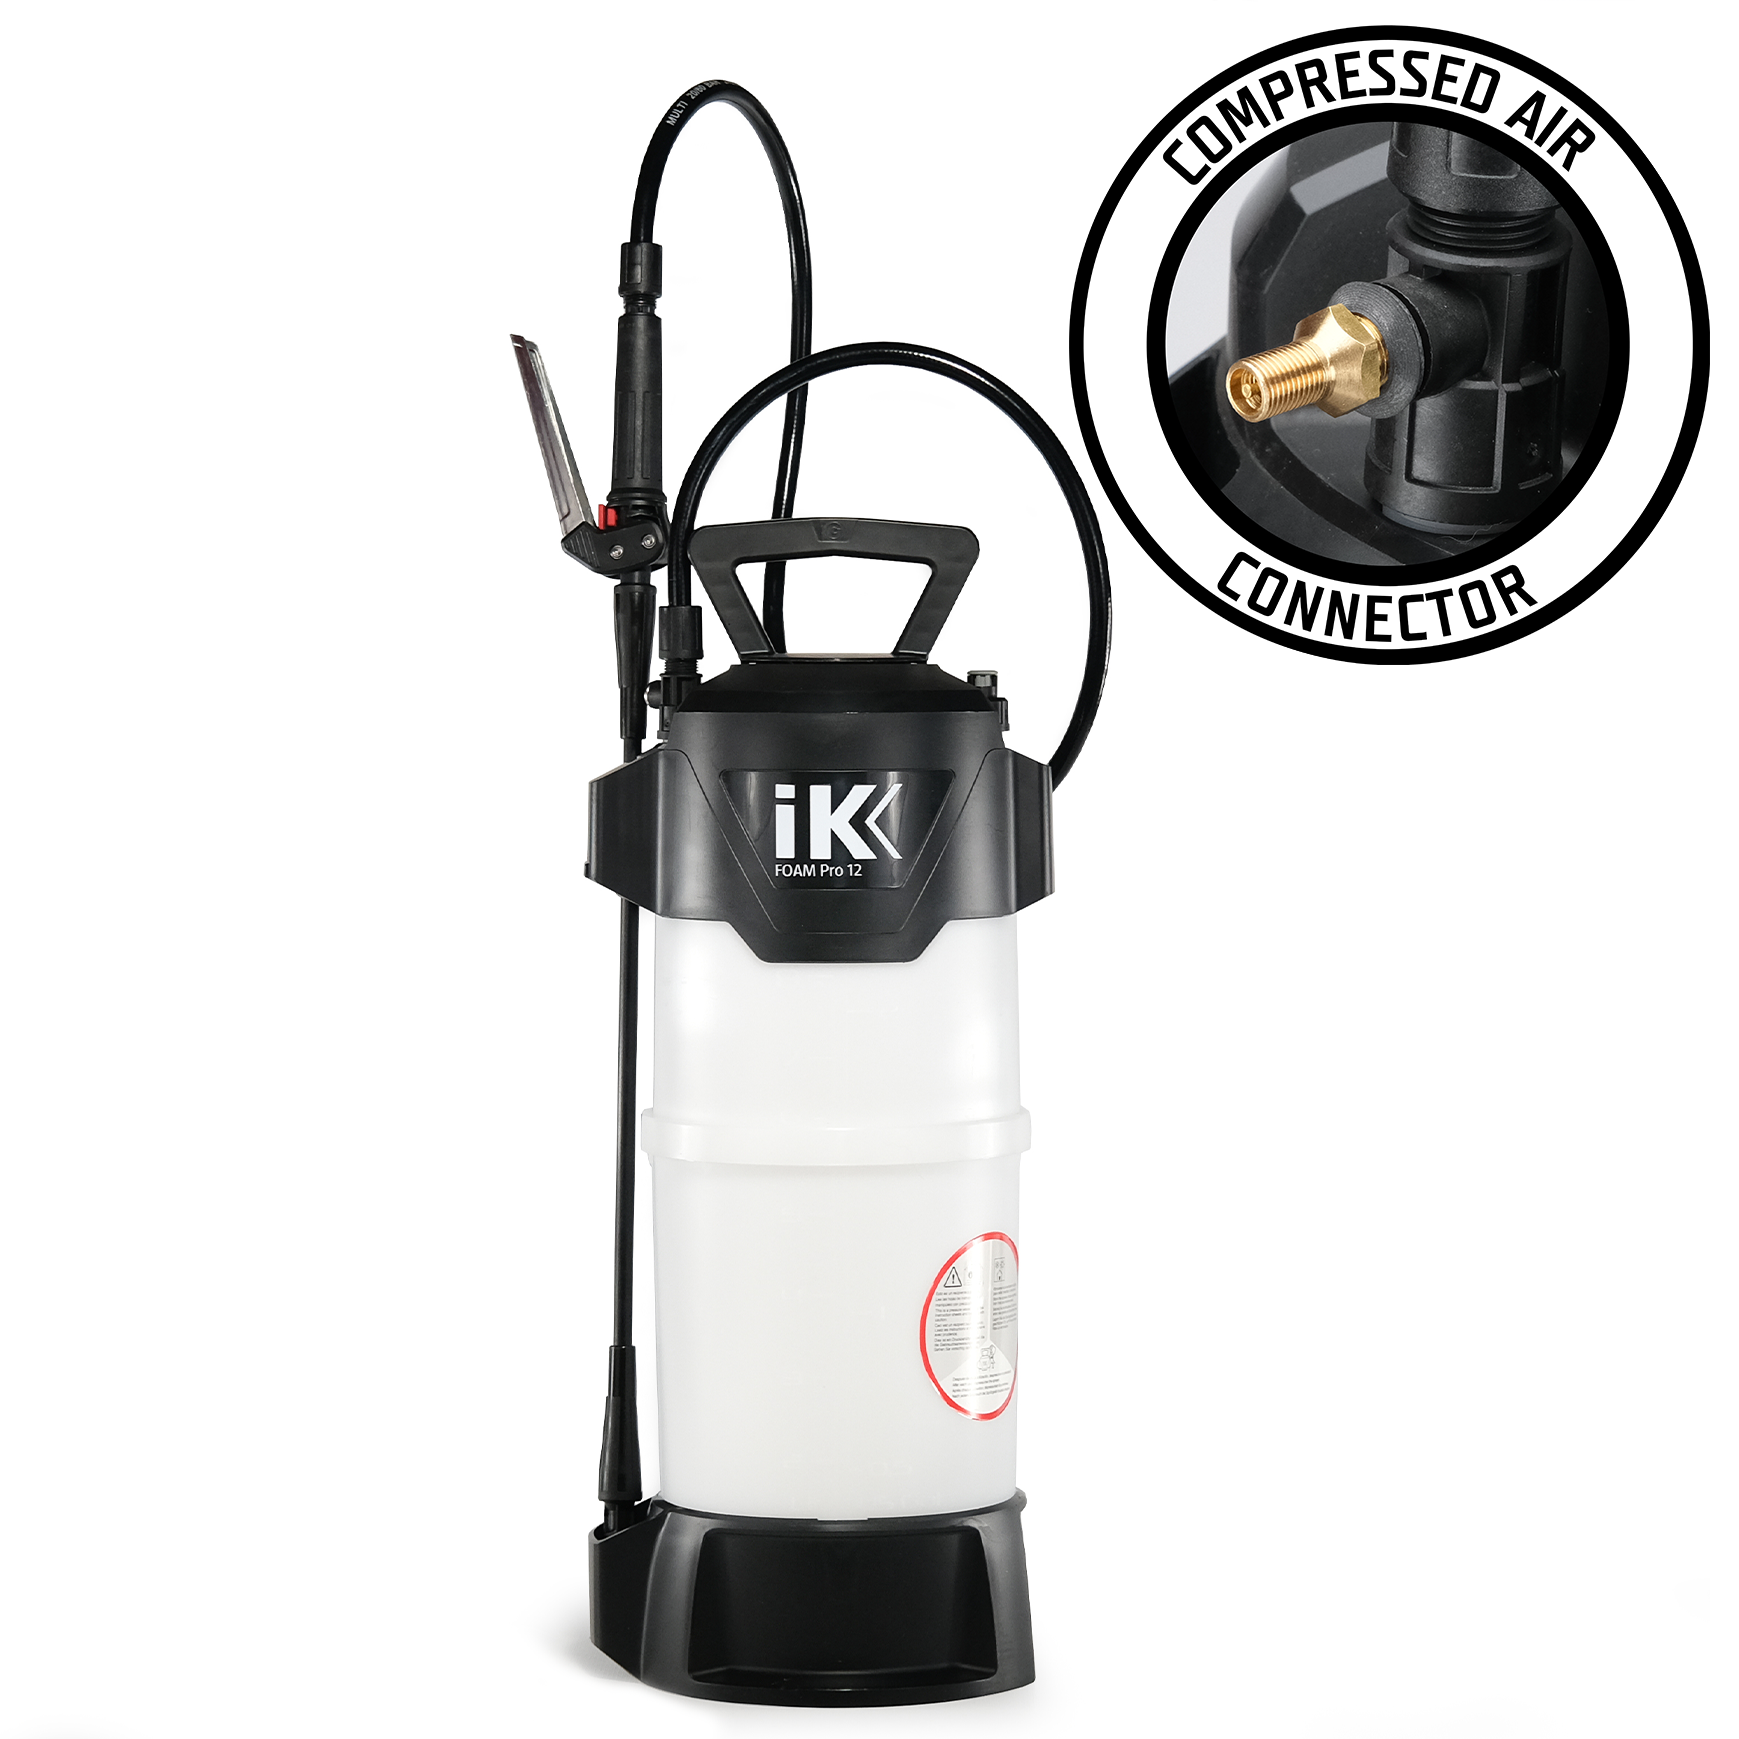 IK Foam Sprayer Pro E12 Car Wash System with Convenient Battery